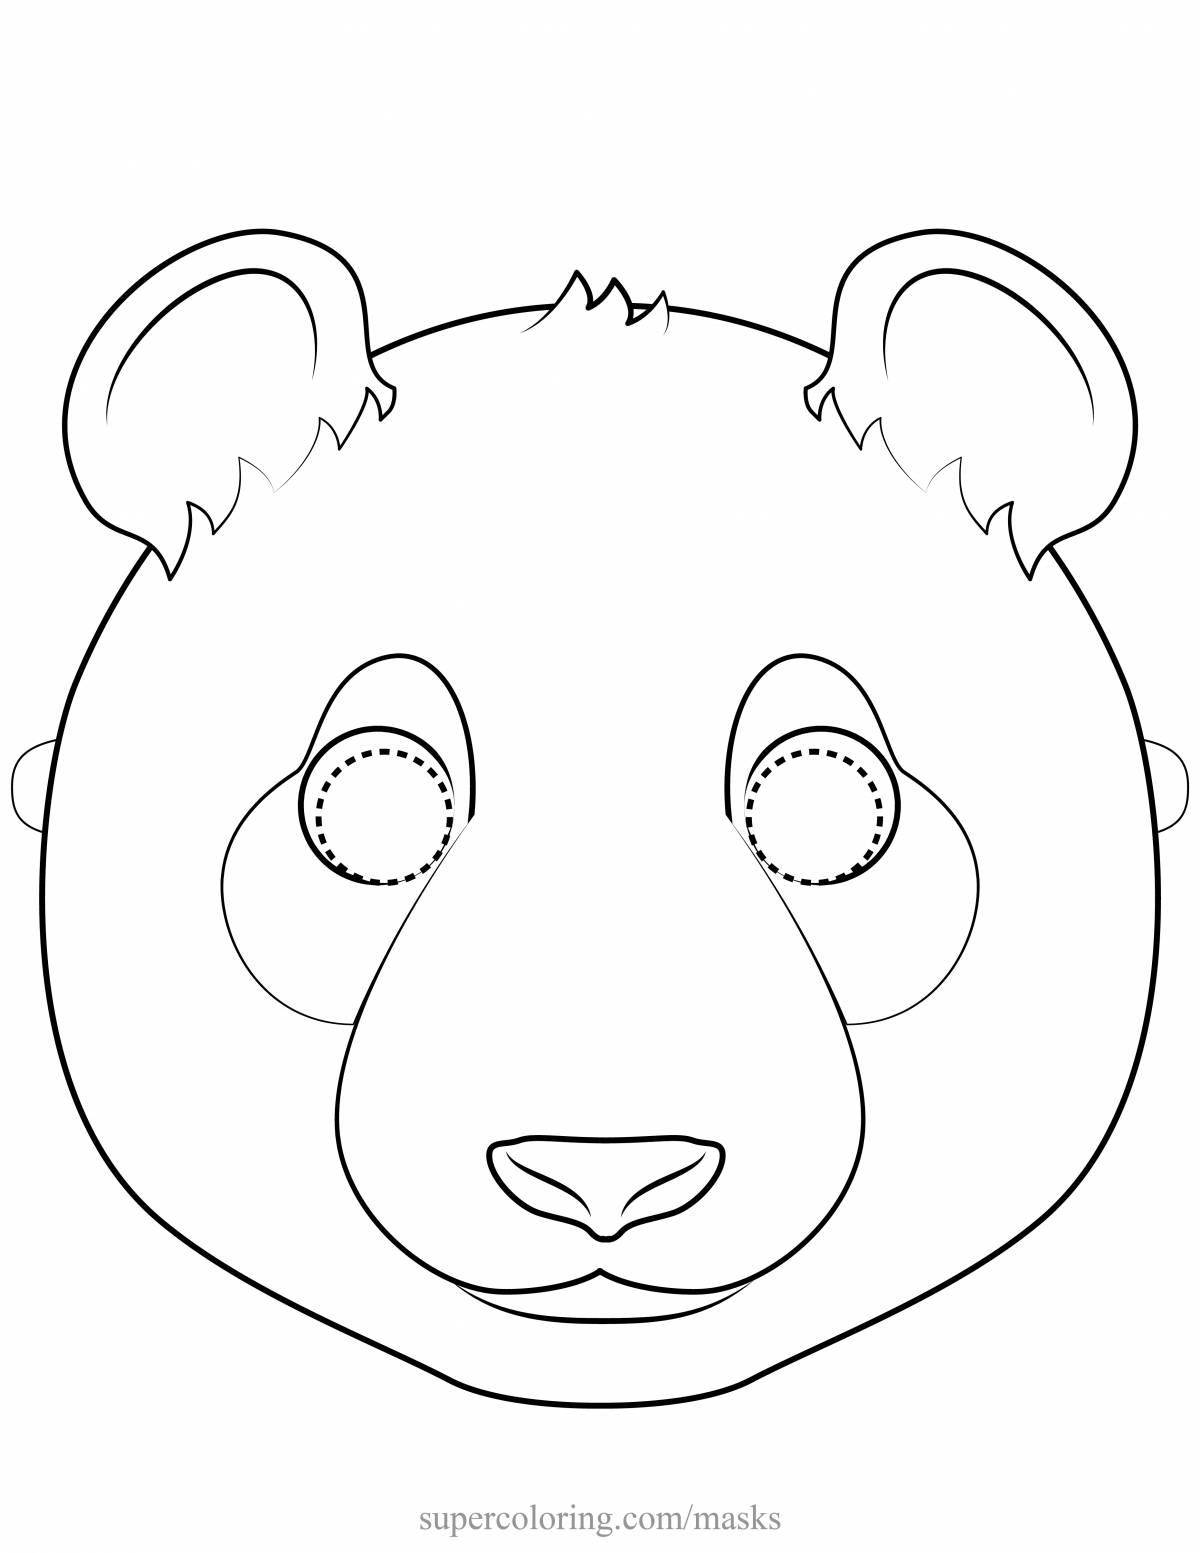 Медведь карандашом